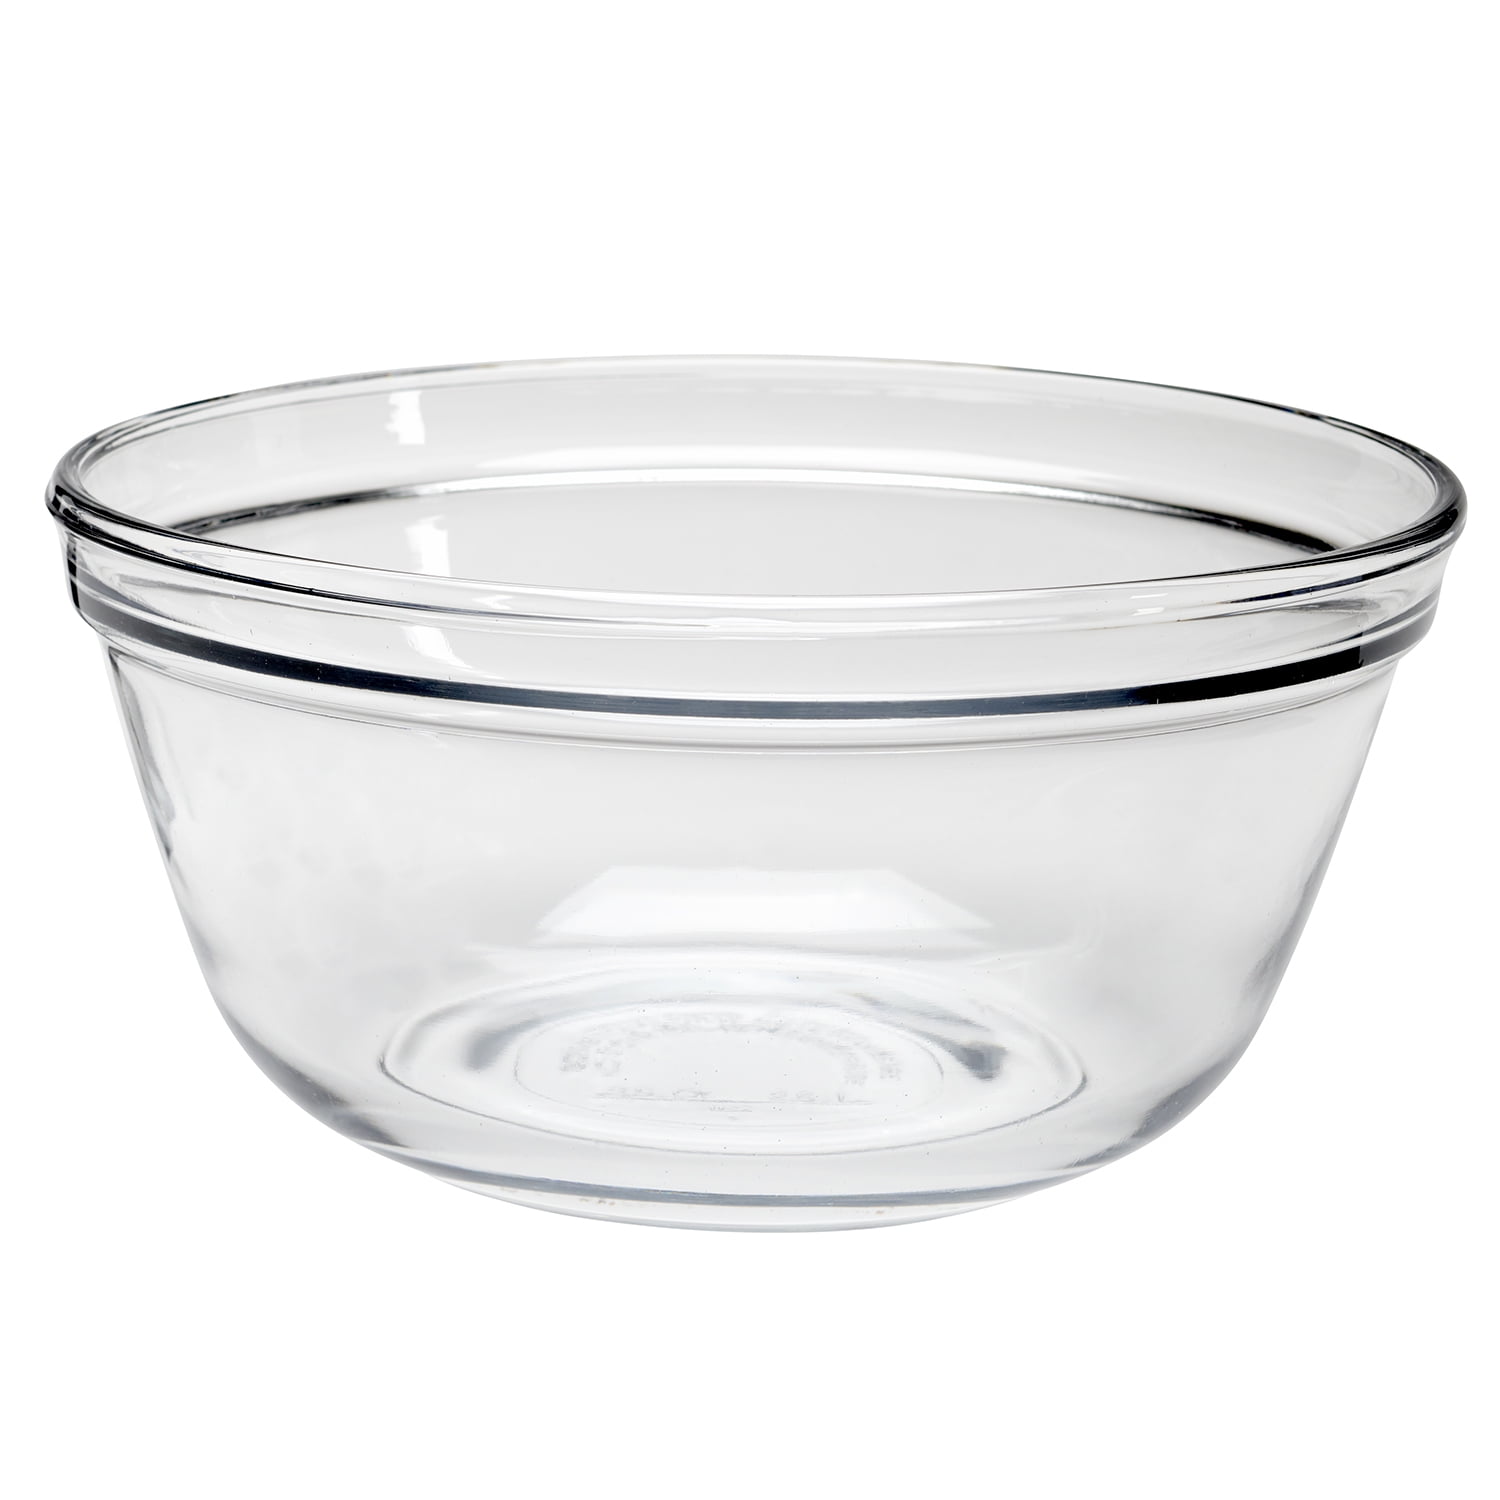 Mainstays Clear Glass Mixing Bowl ,4QT